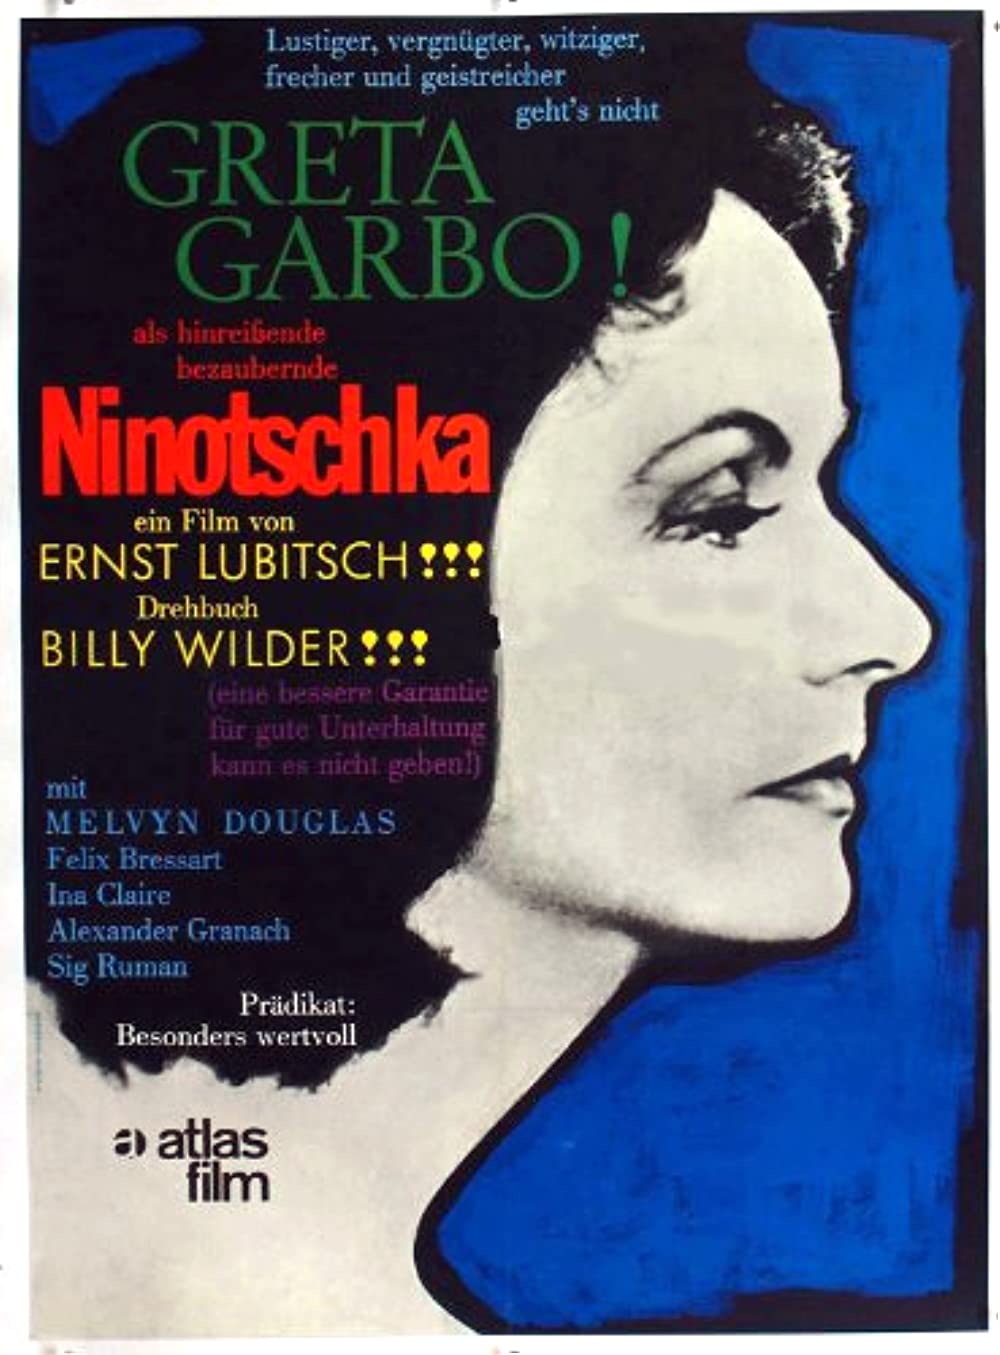 Filmbeschreibung zu Ninotchka